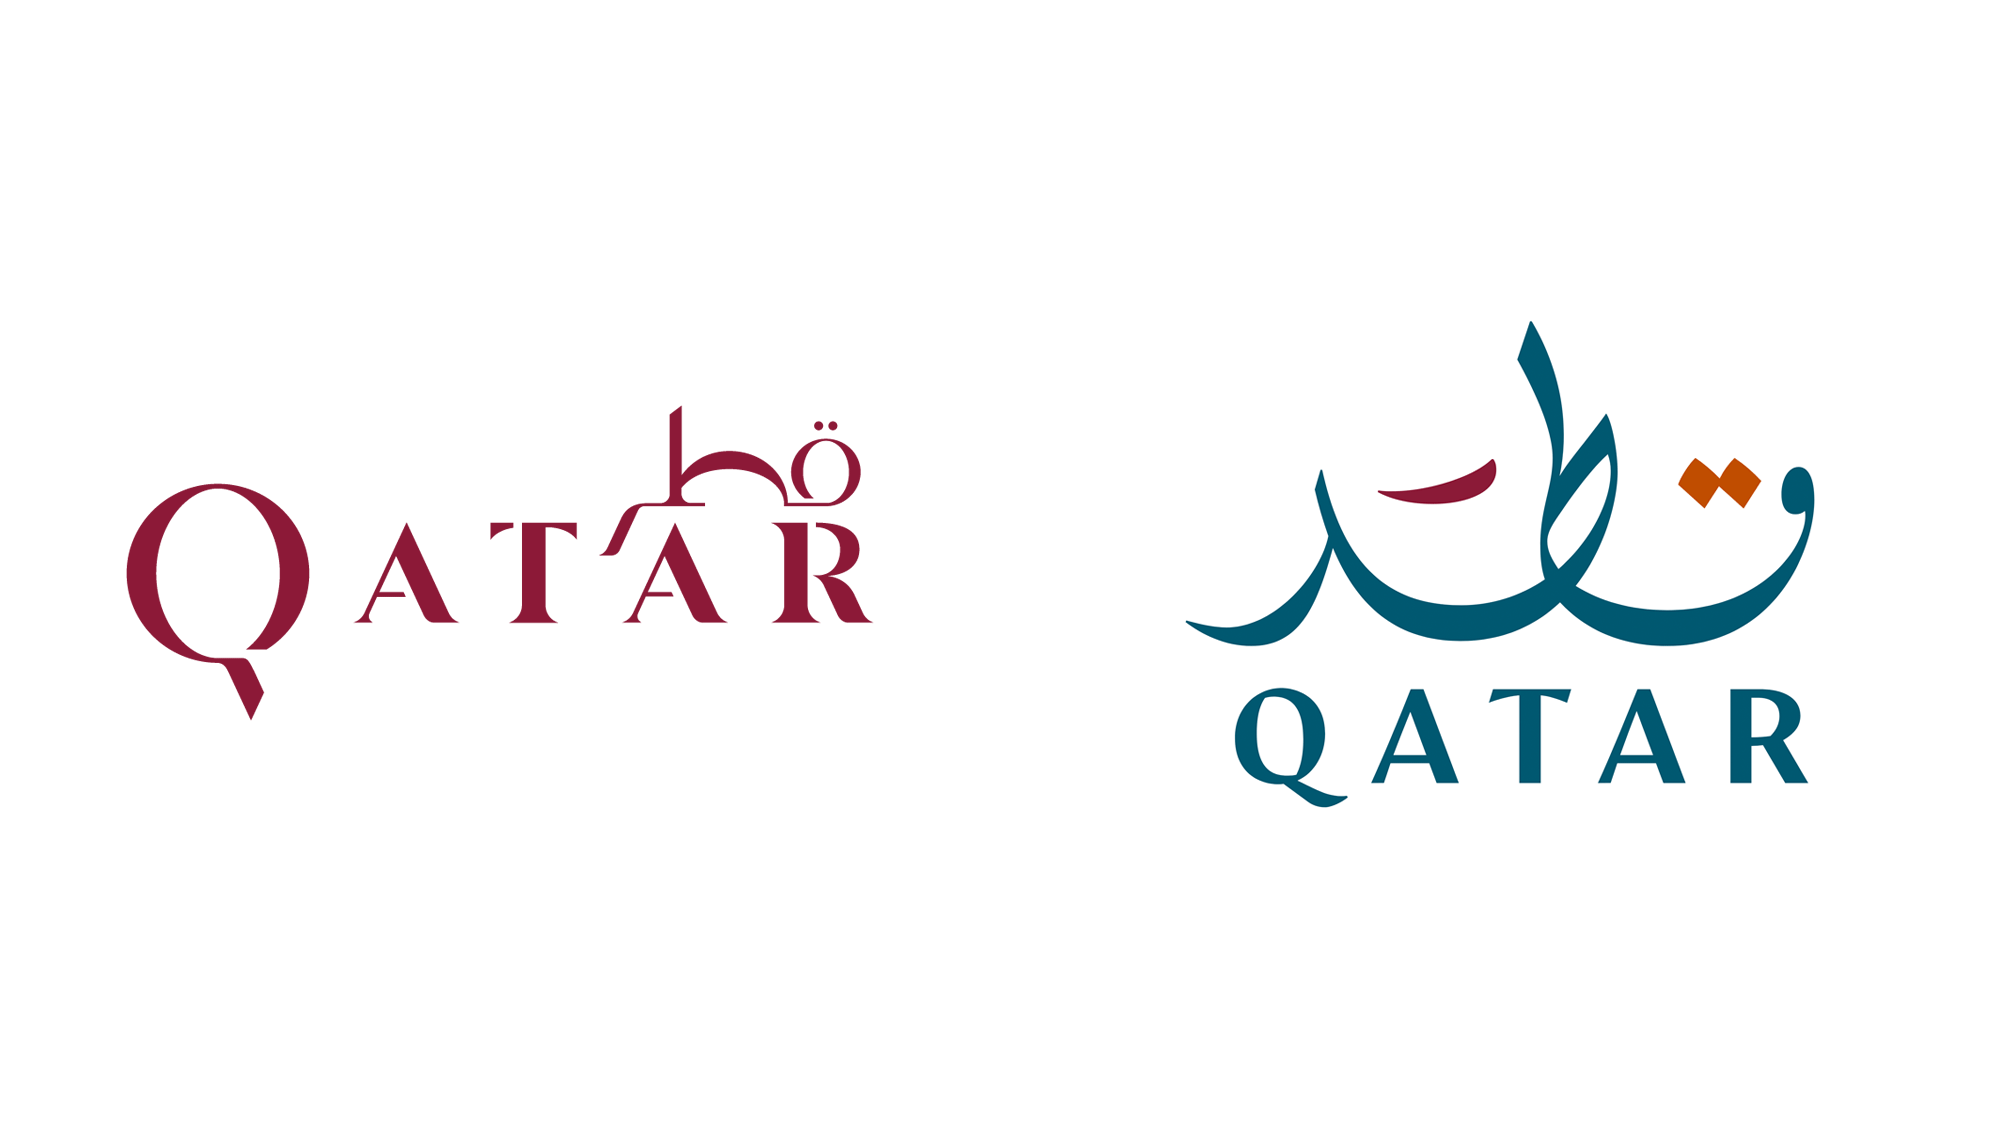 tourism companies in qatar